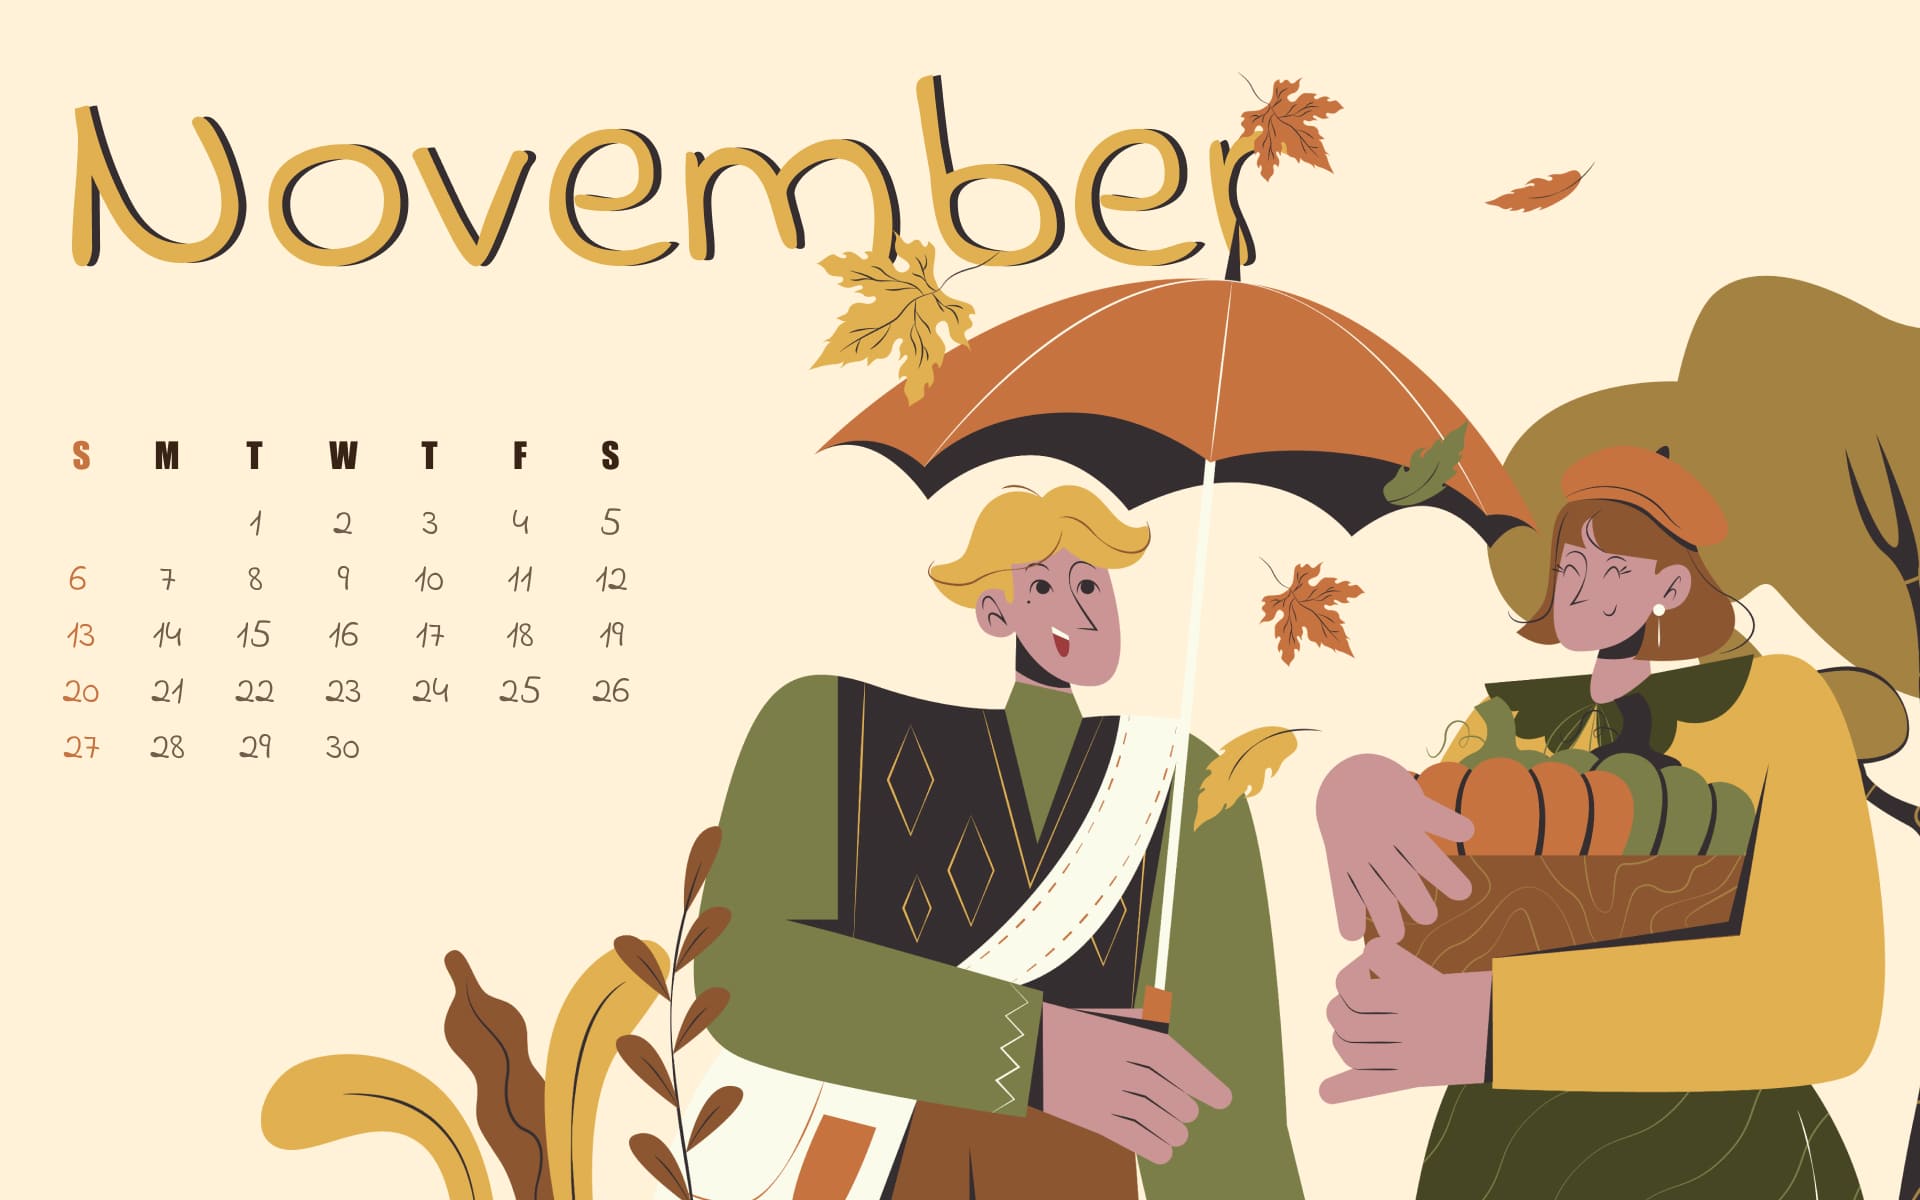 Free autumn November calendar, image size 1920x1200.